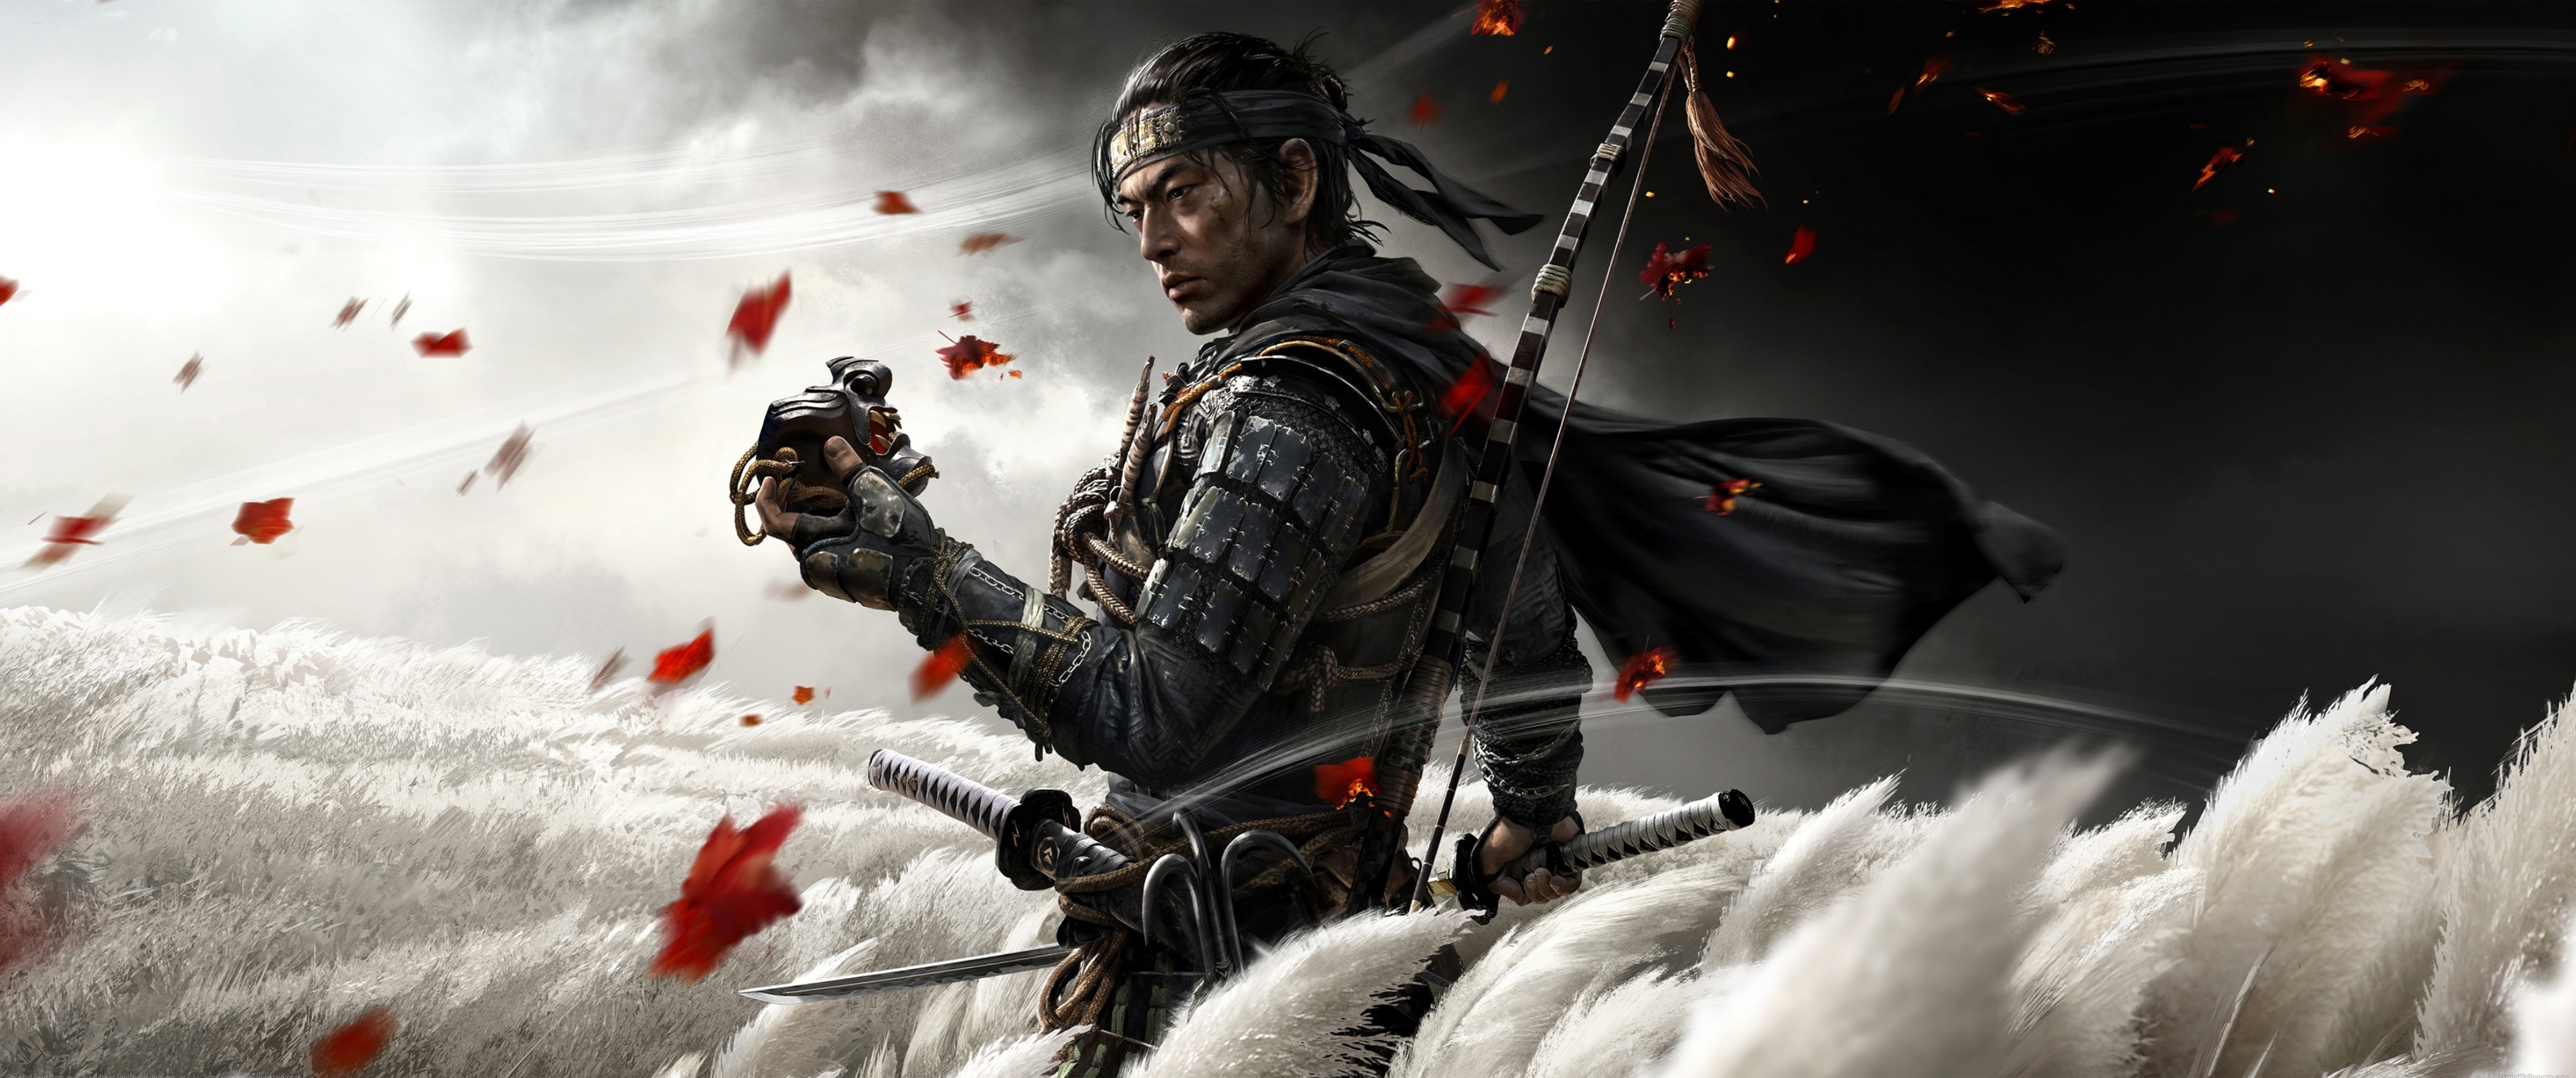 General 5120x2143 video games digital art video game art katana samurai Ronin Ghost of Tsushima  ultrawide fantasy men warrior fantasy art Jin Sakai Sucker Punch Productions